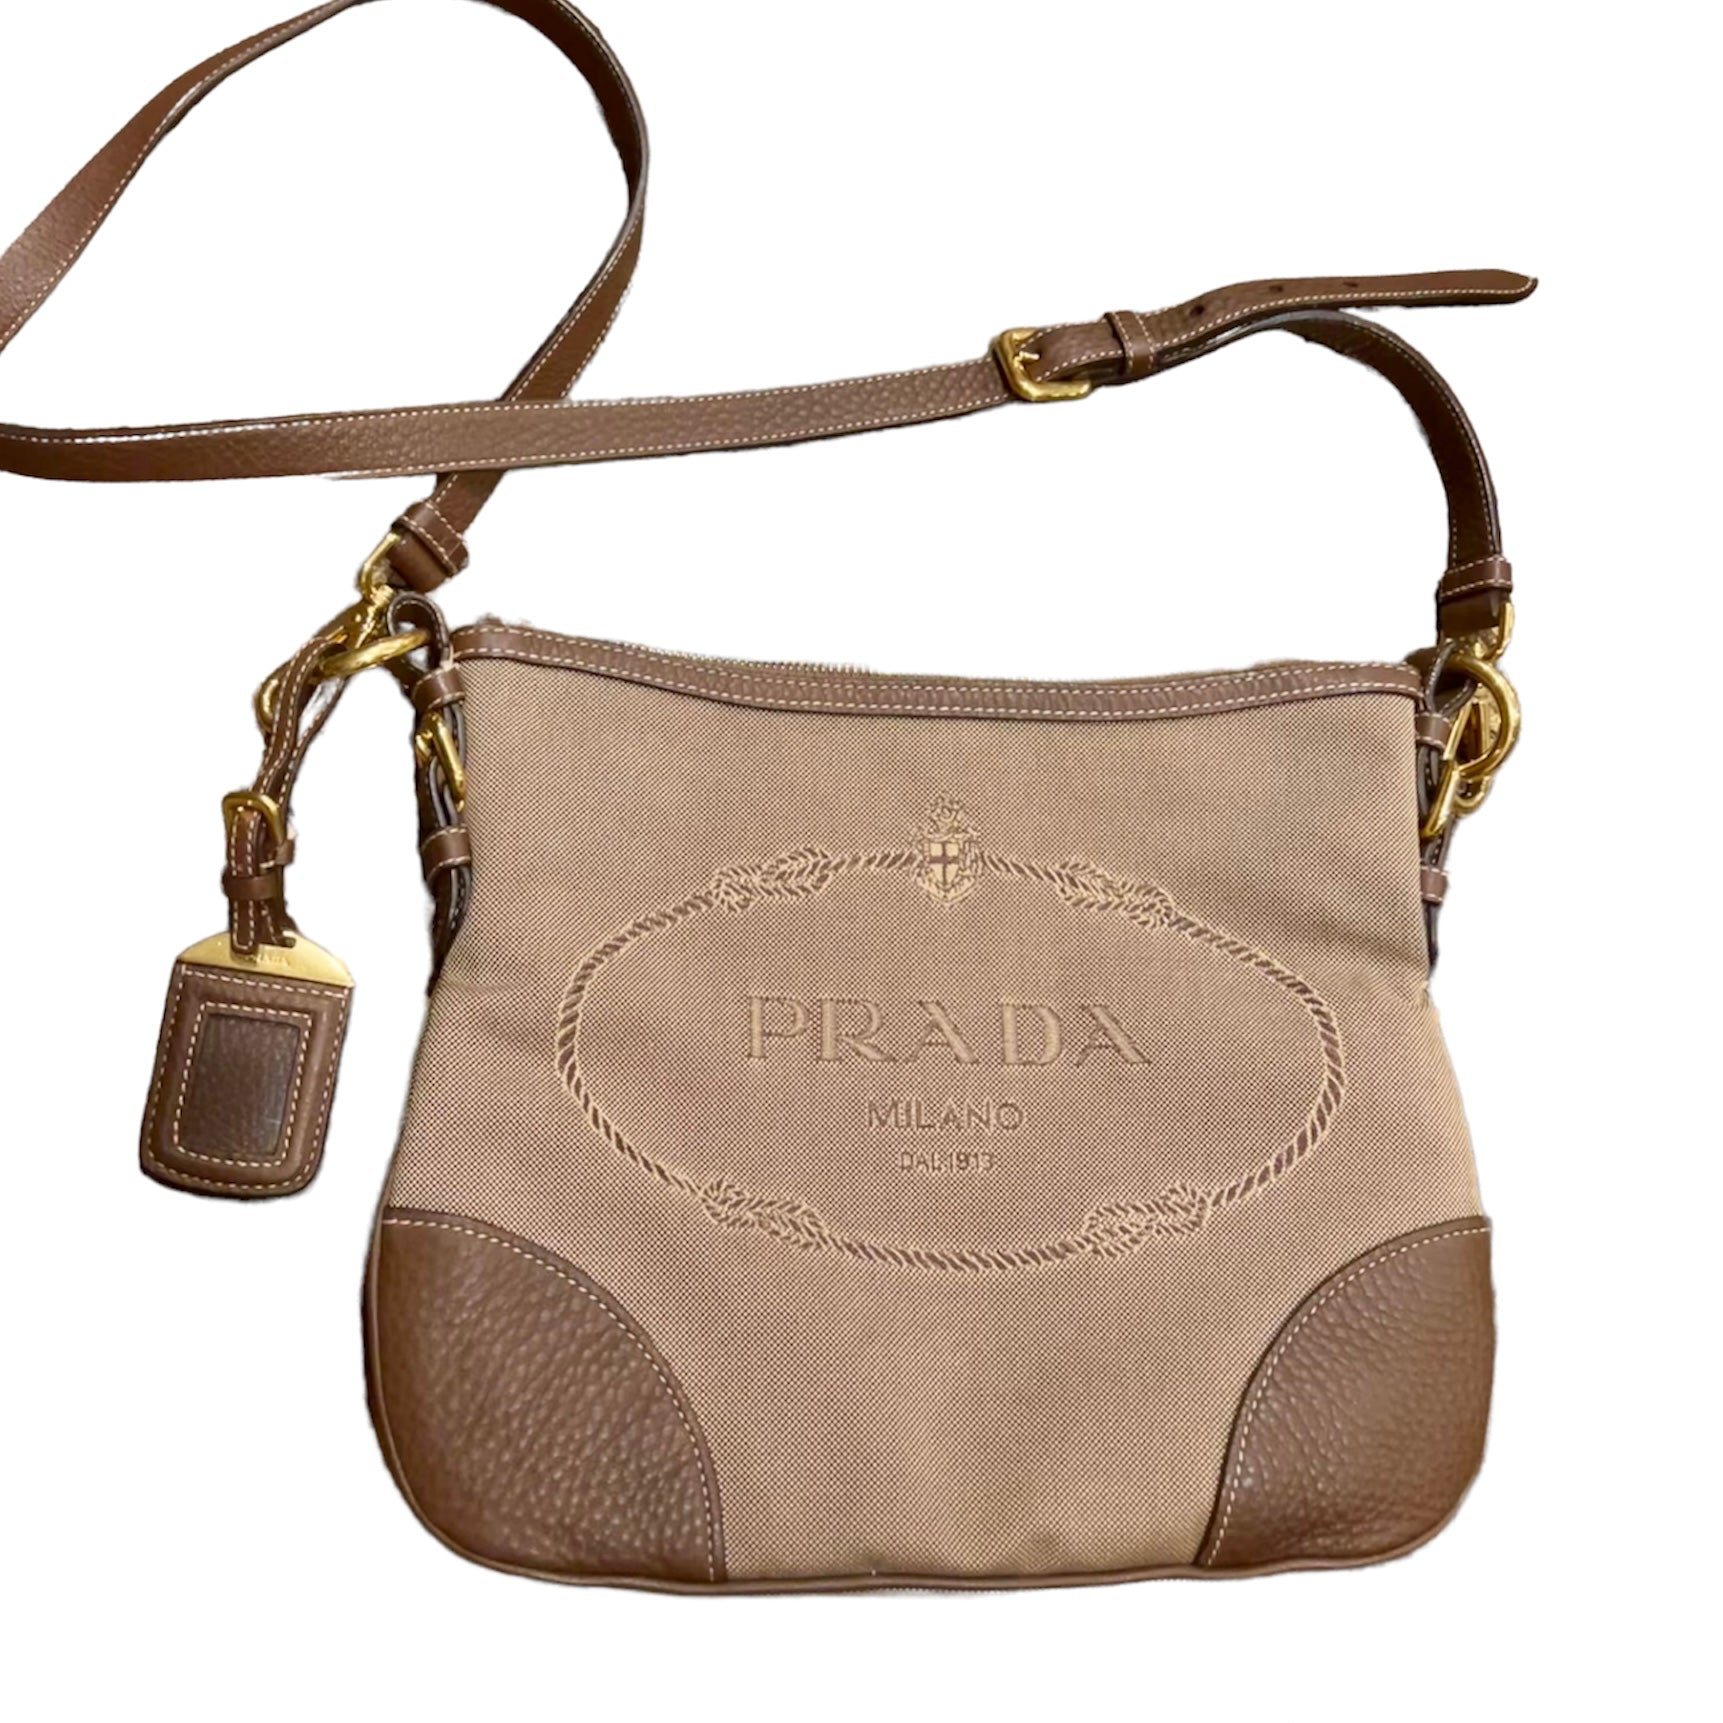 100% Authentic Prada Canvas and Leather Crossbody Bag